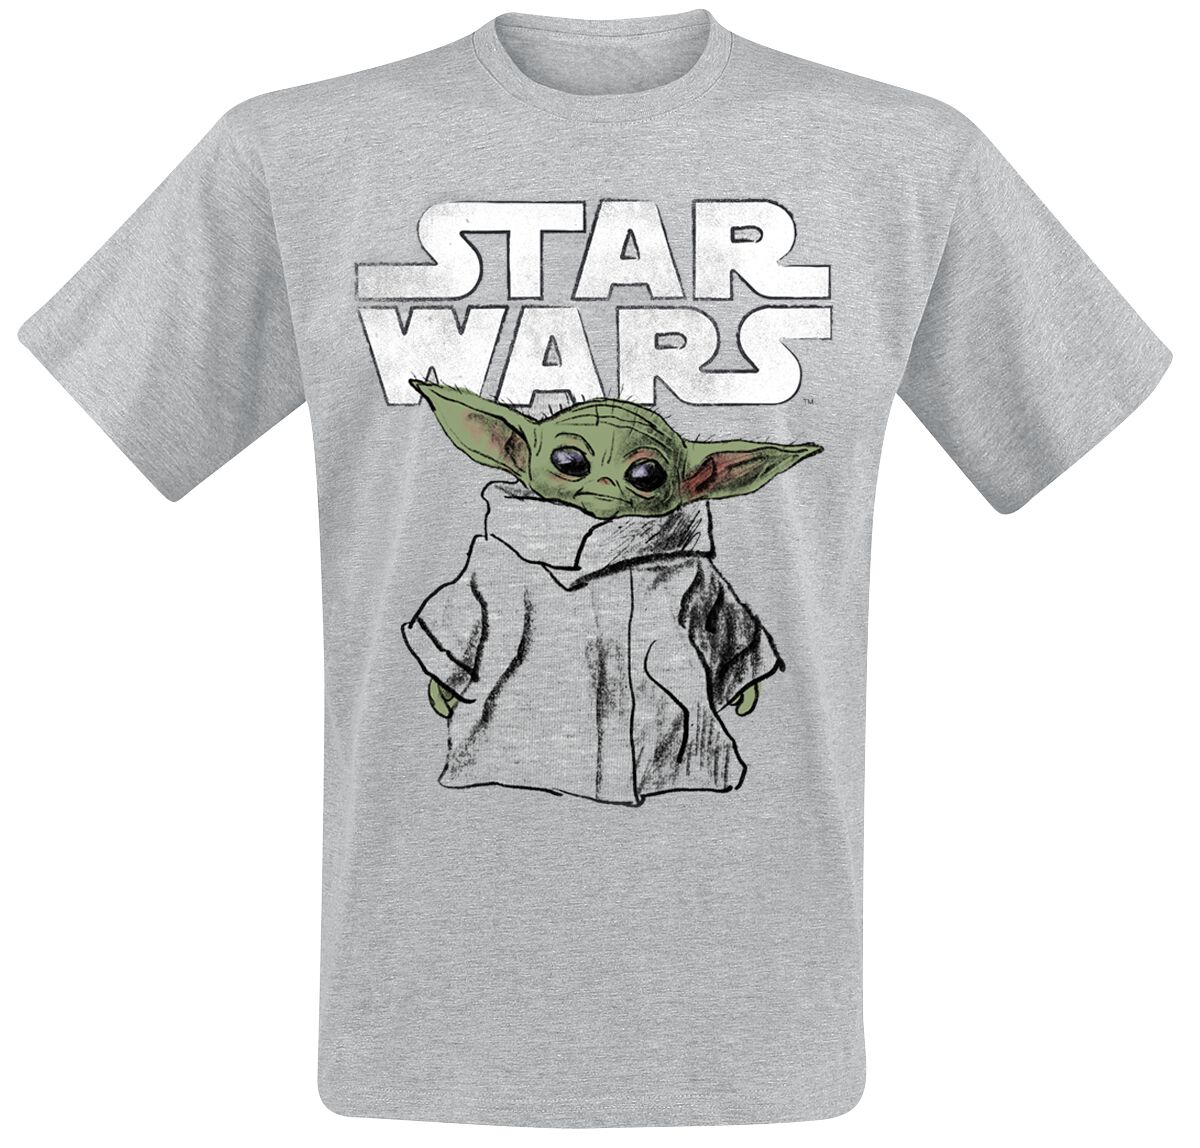 Star Wars The Mandalorian - Grogu - Sketch T-Shirt grau meliert in M